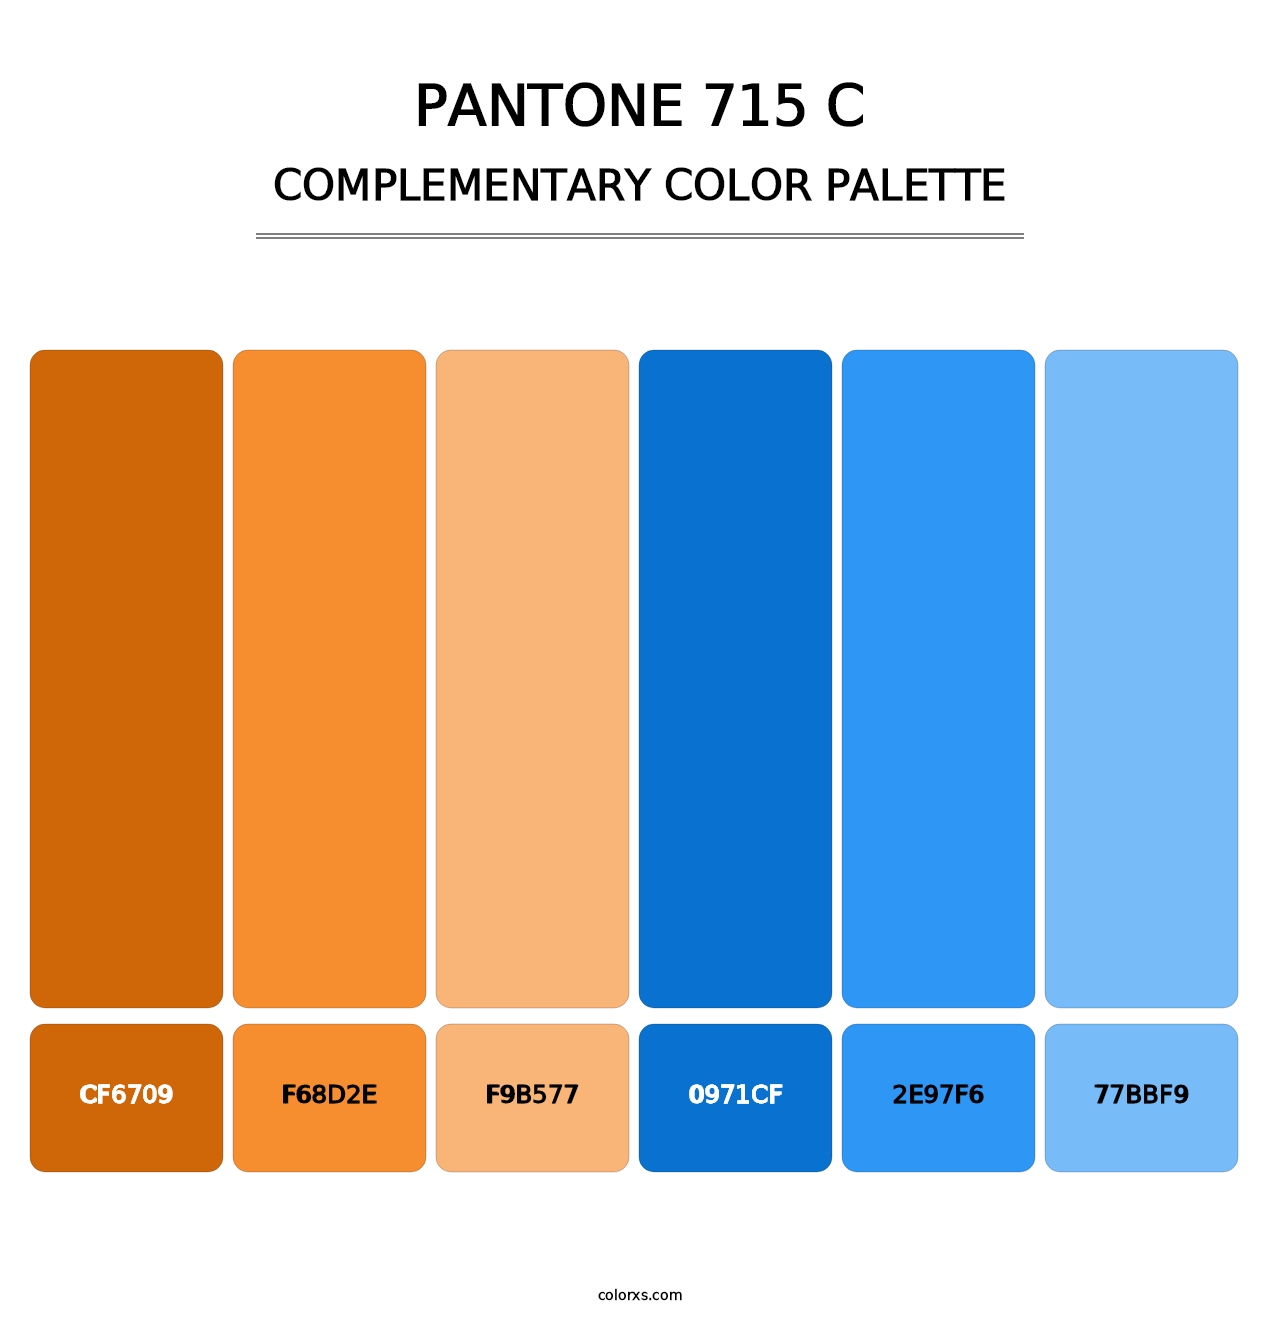 PANTONE 715 C - Complementary Color Palette